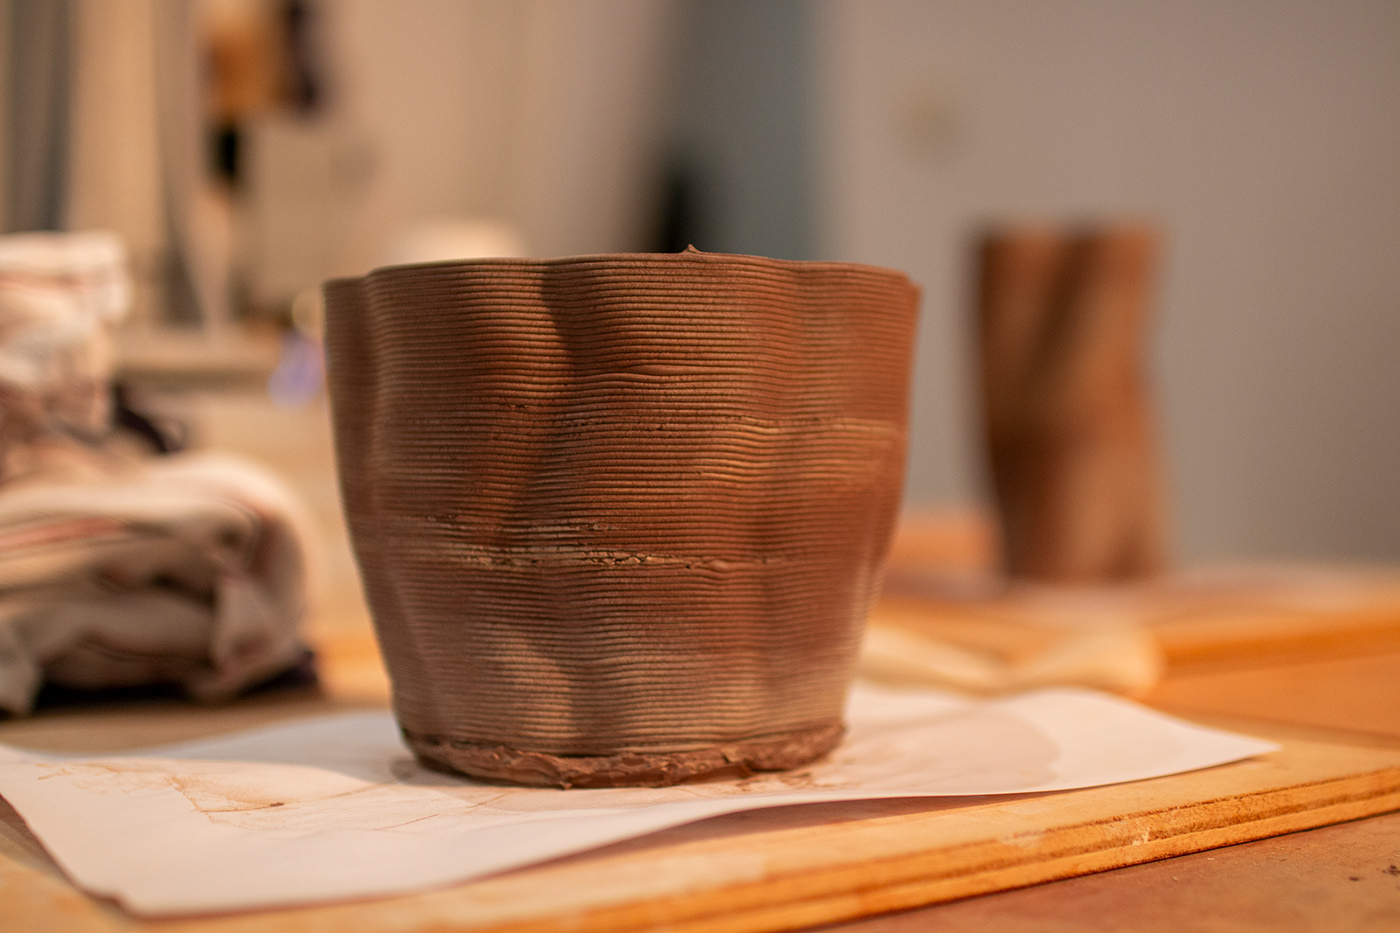 vases ceramics  3d printed 3d printed ceramics vases design